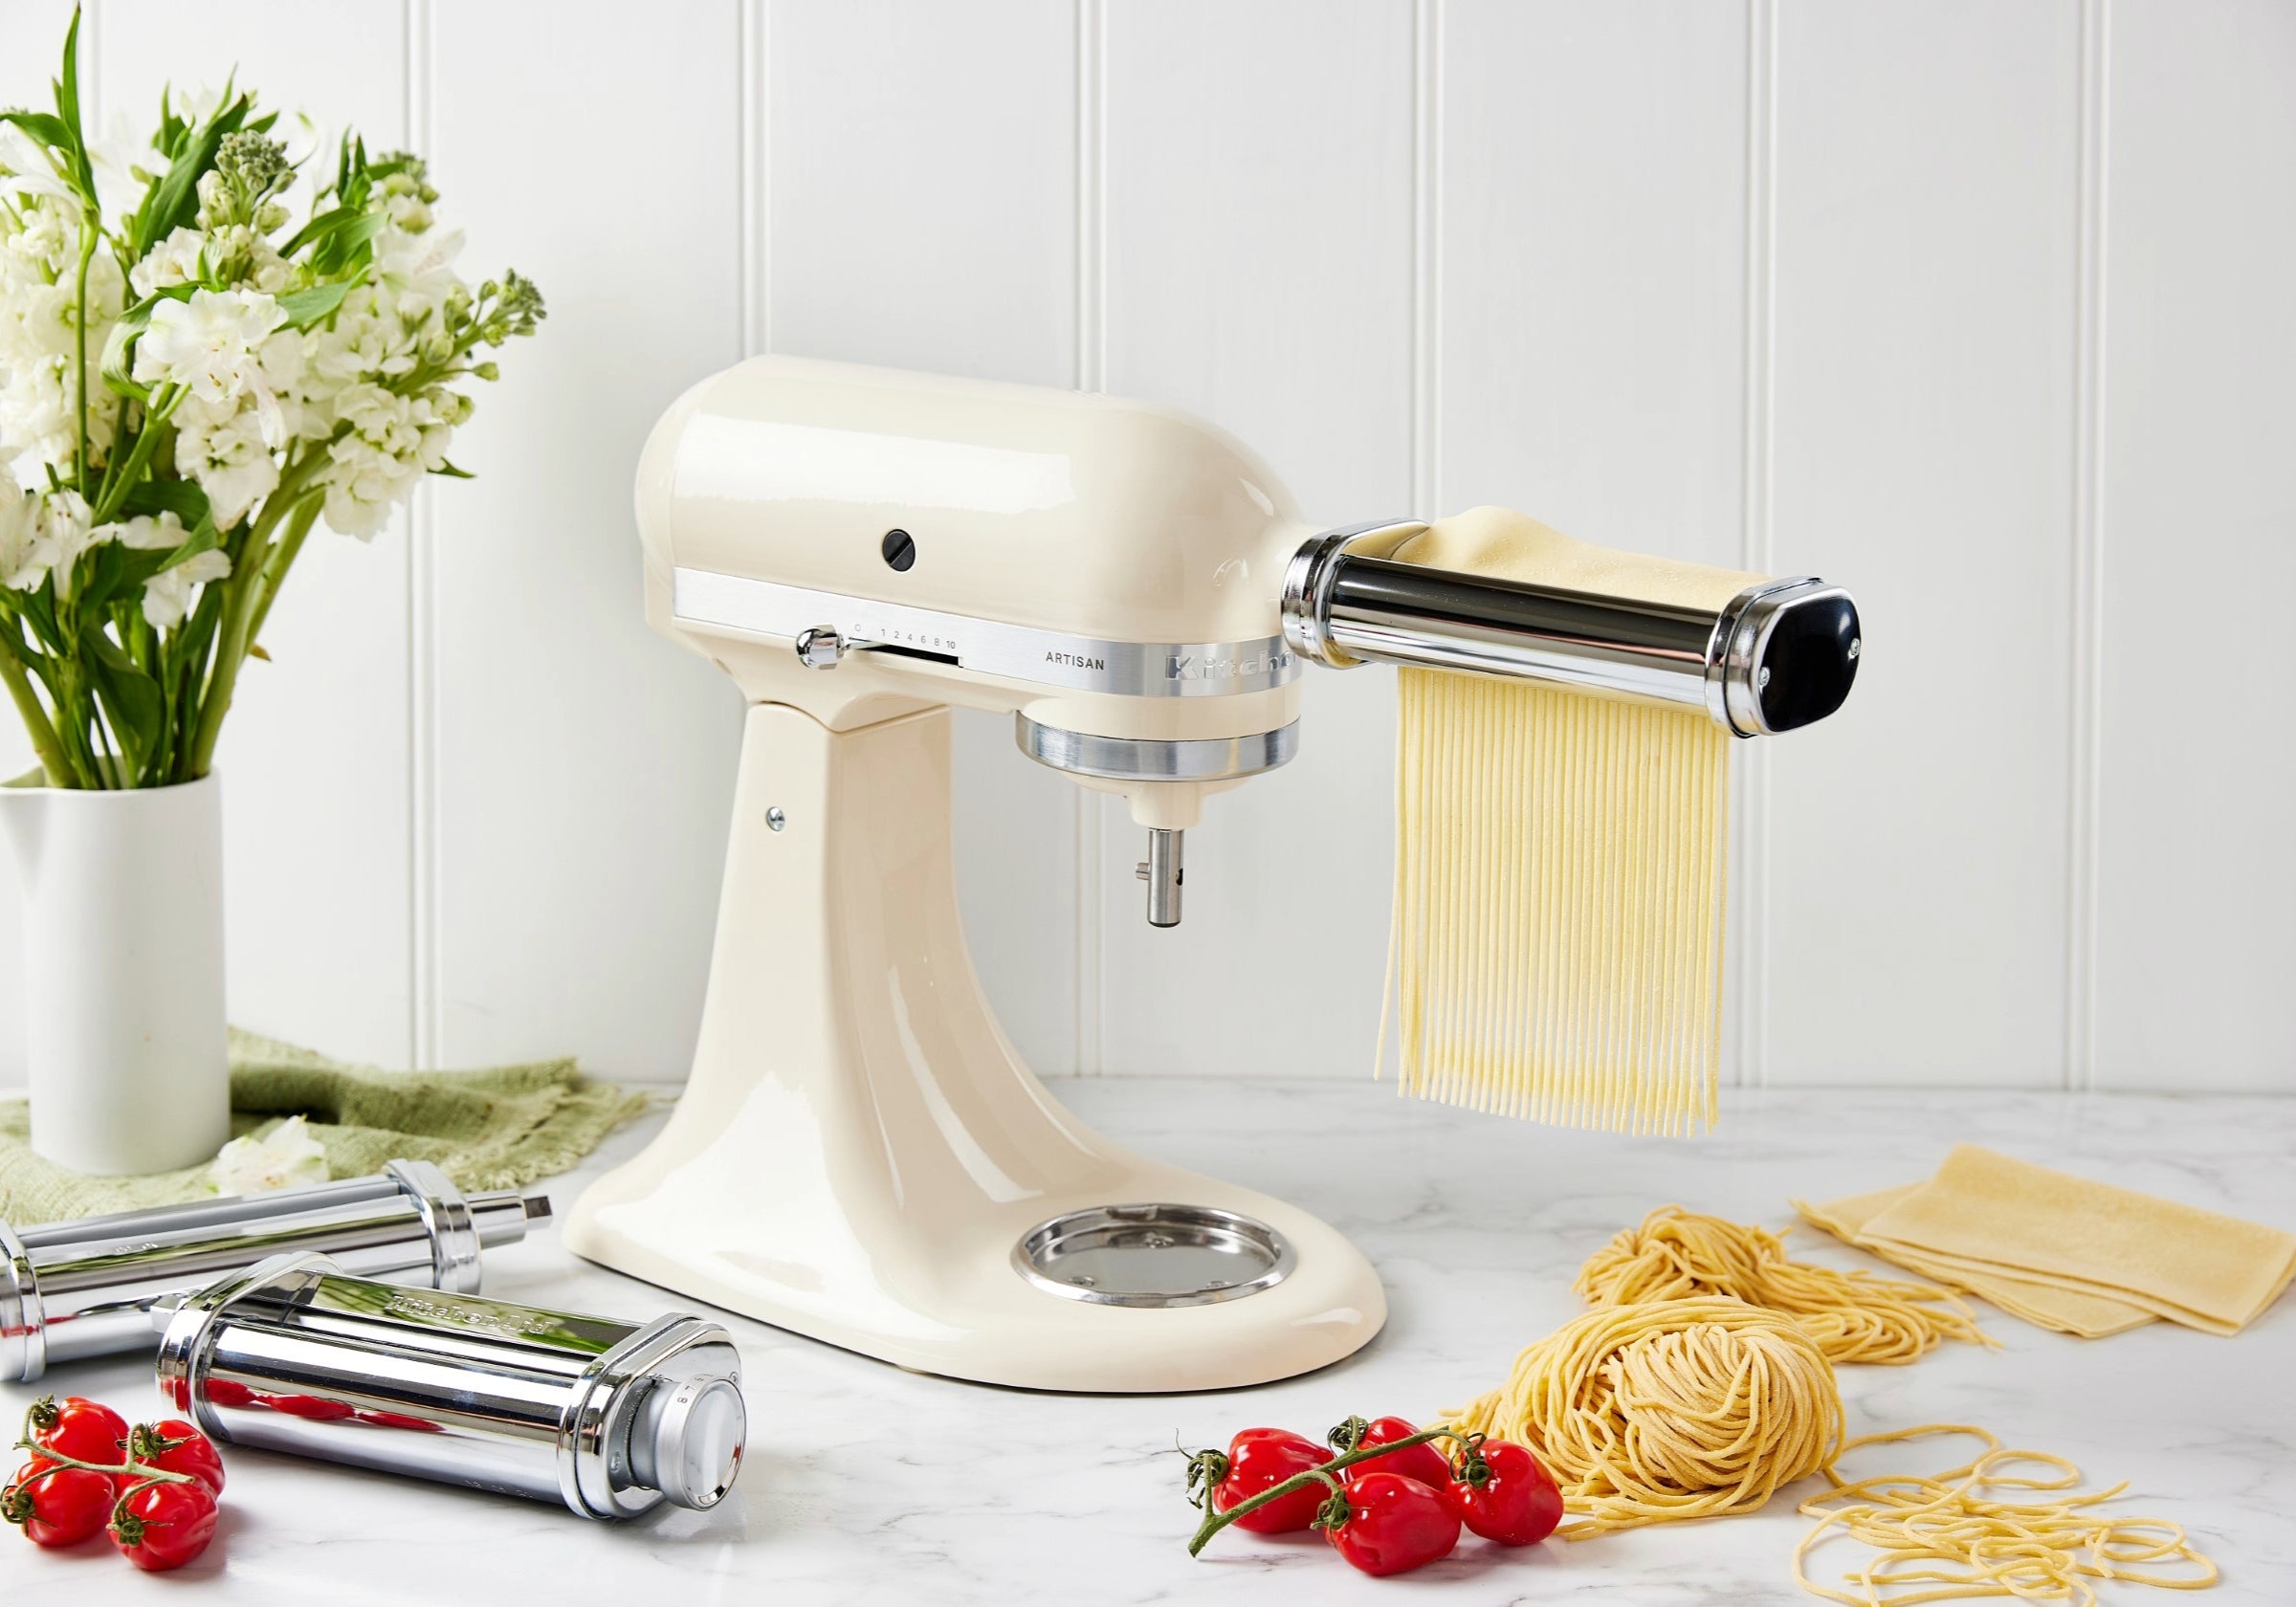 New KitchenAid 3-Piece Pasta Roller and Cutter Attachment KSMPRA